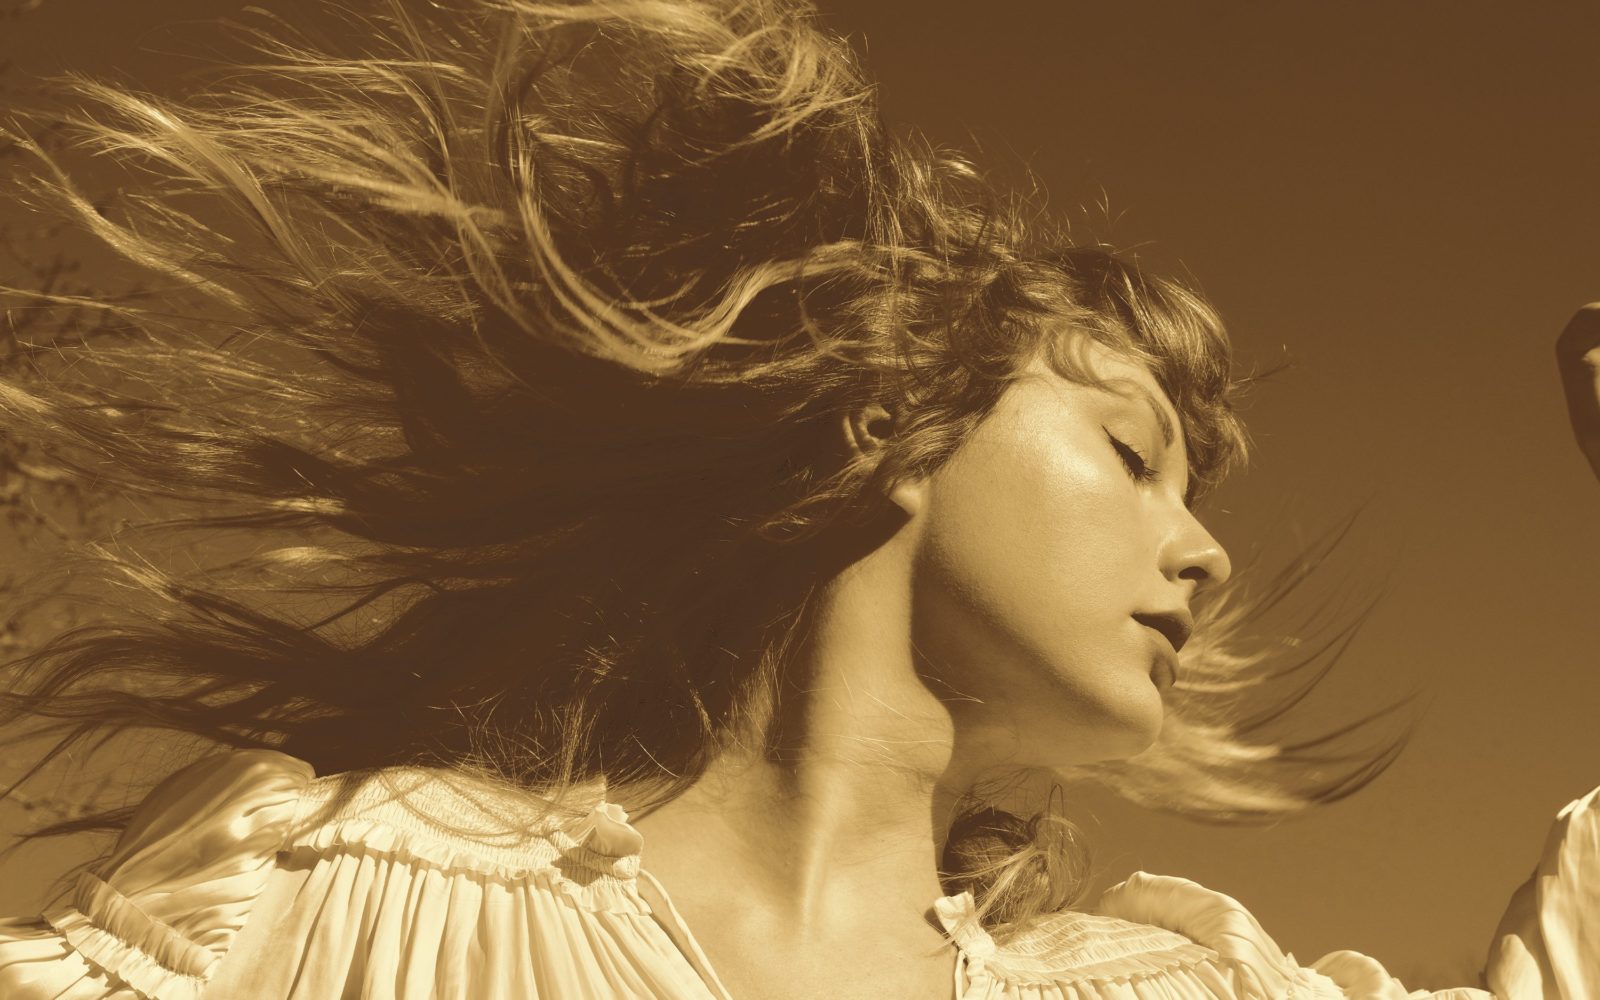 Fearless (Taylor’s Version) e a nova fase destemida de Taylor Swift